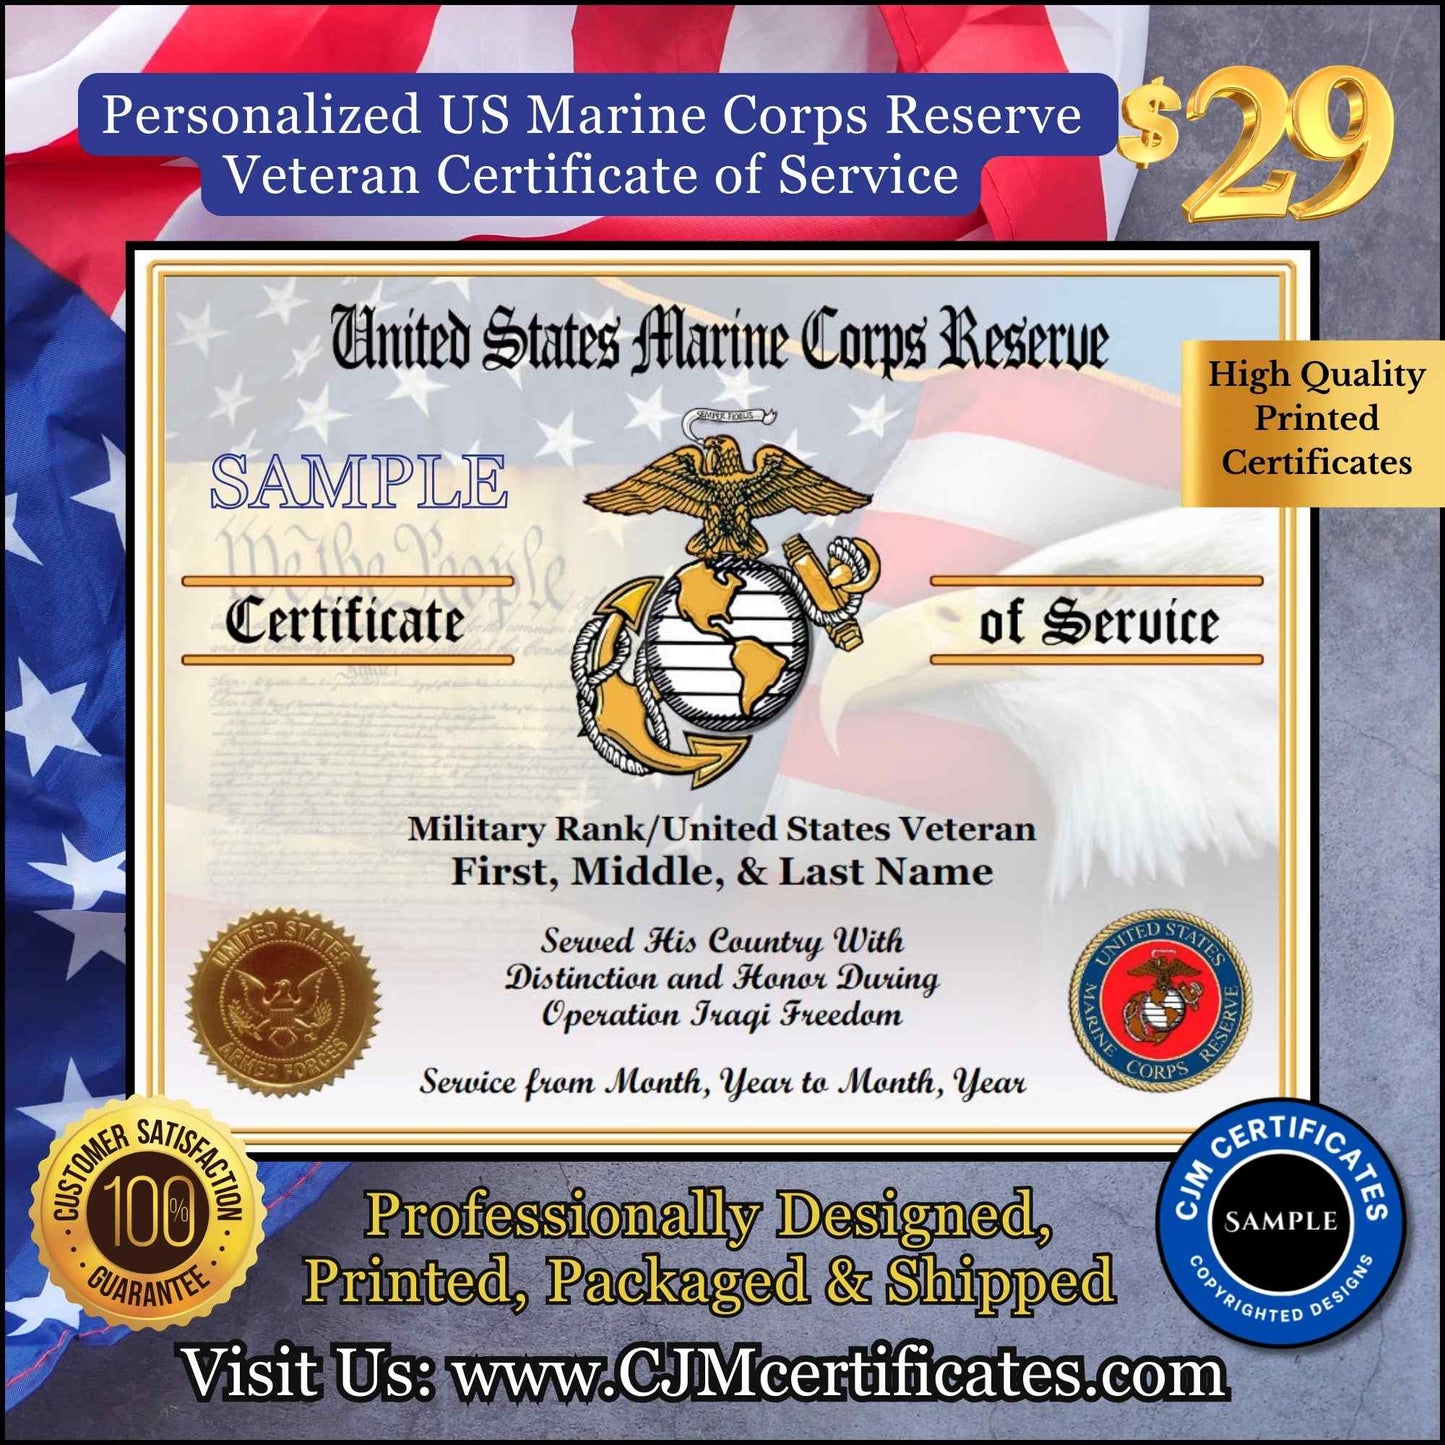 Veteran Certificates of Service